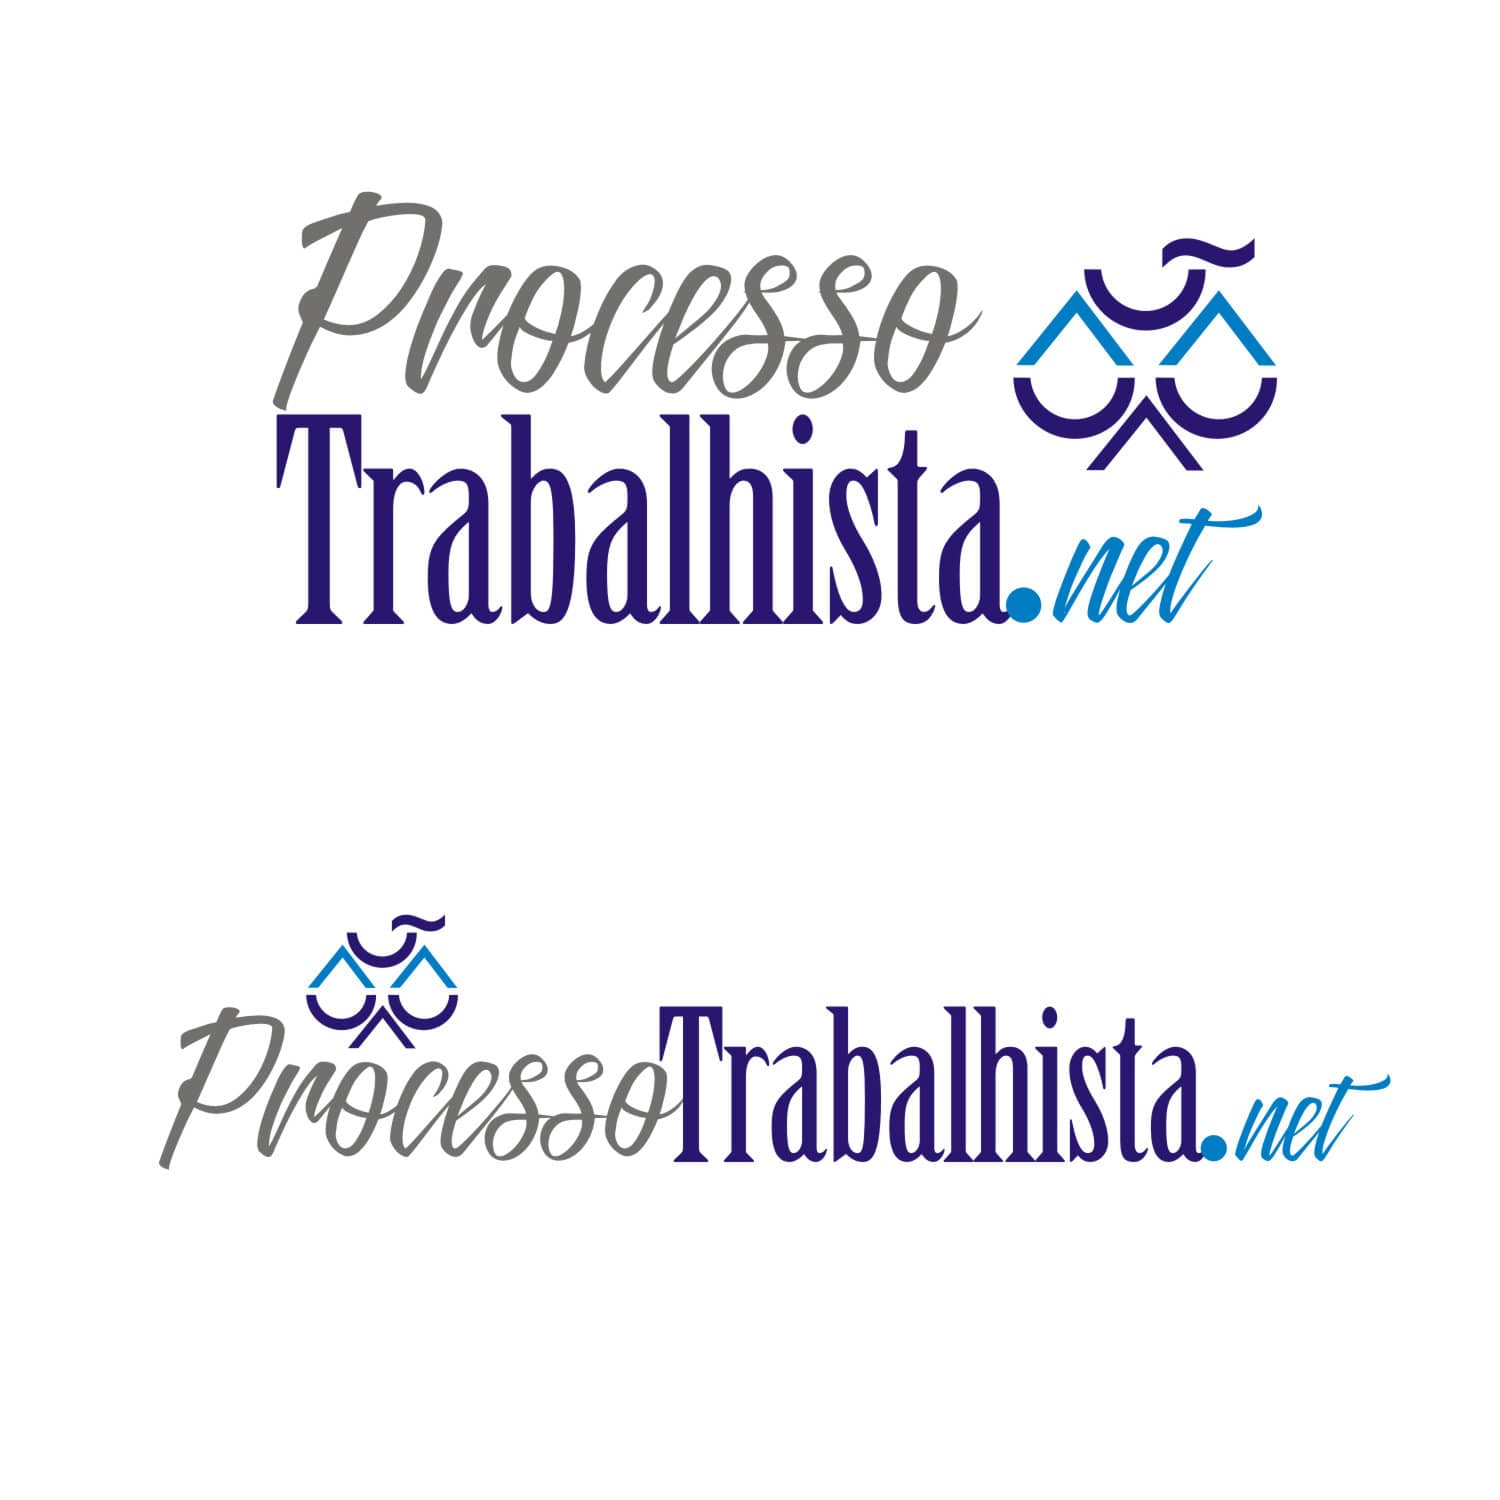 Contato tauris design logos